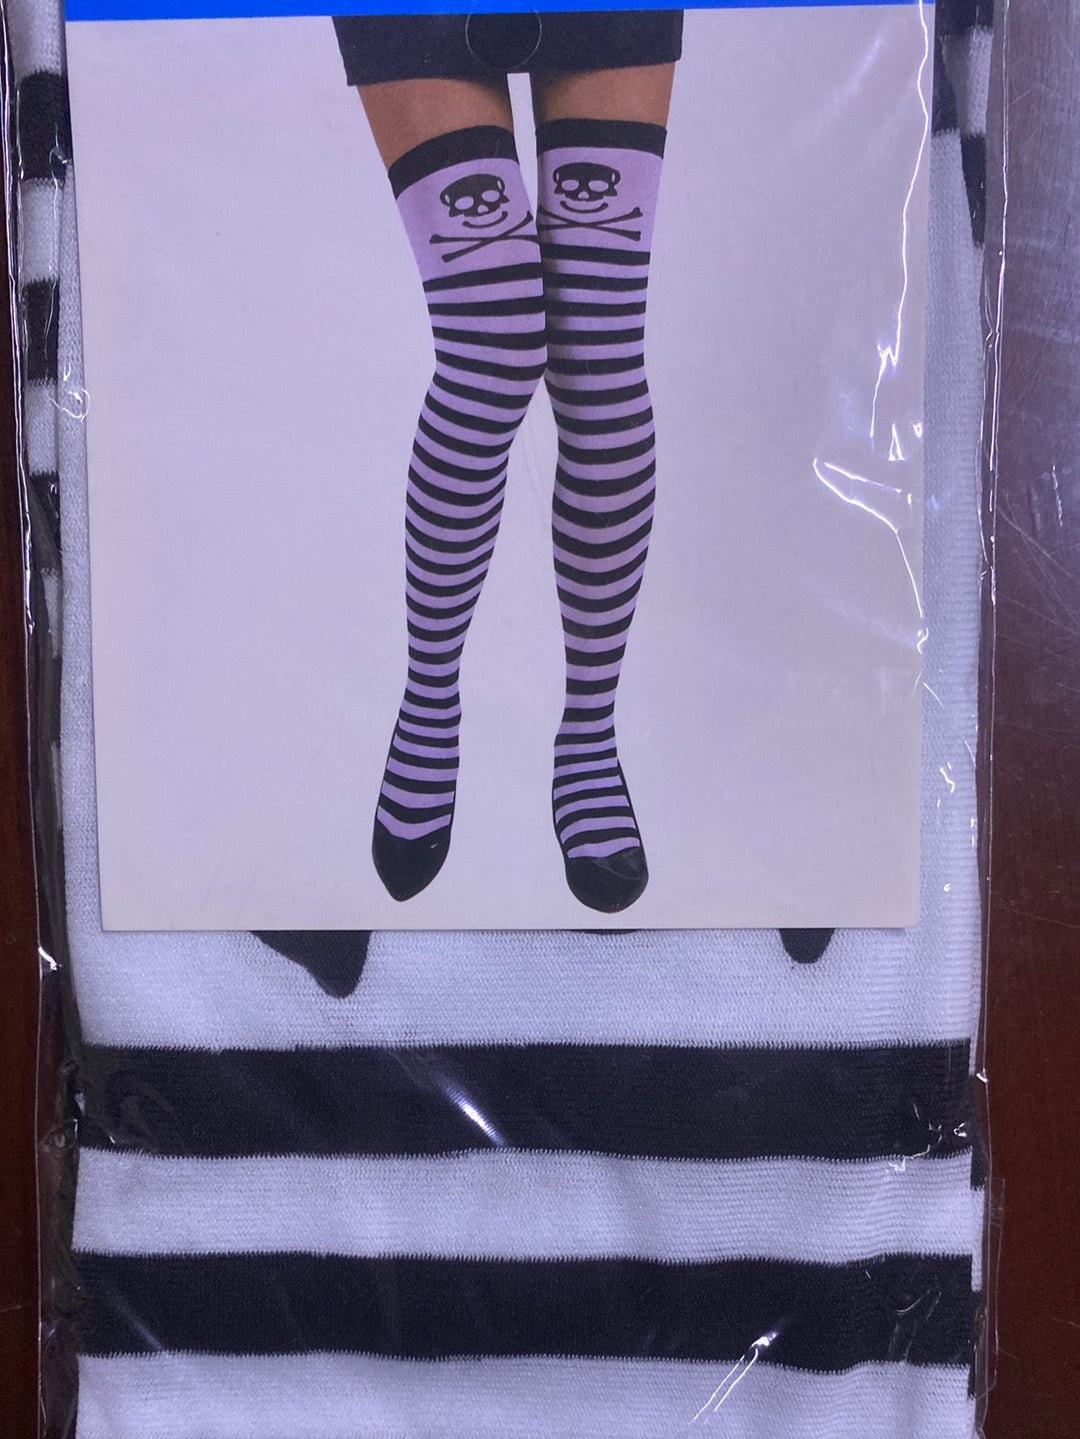 Thigh High Socks - black & white with pirate skull